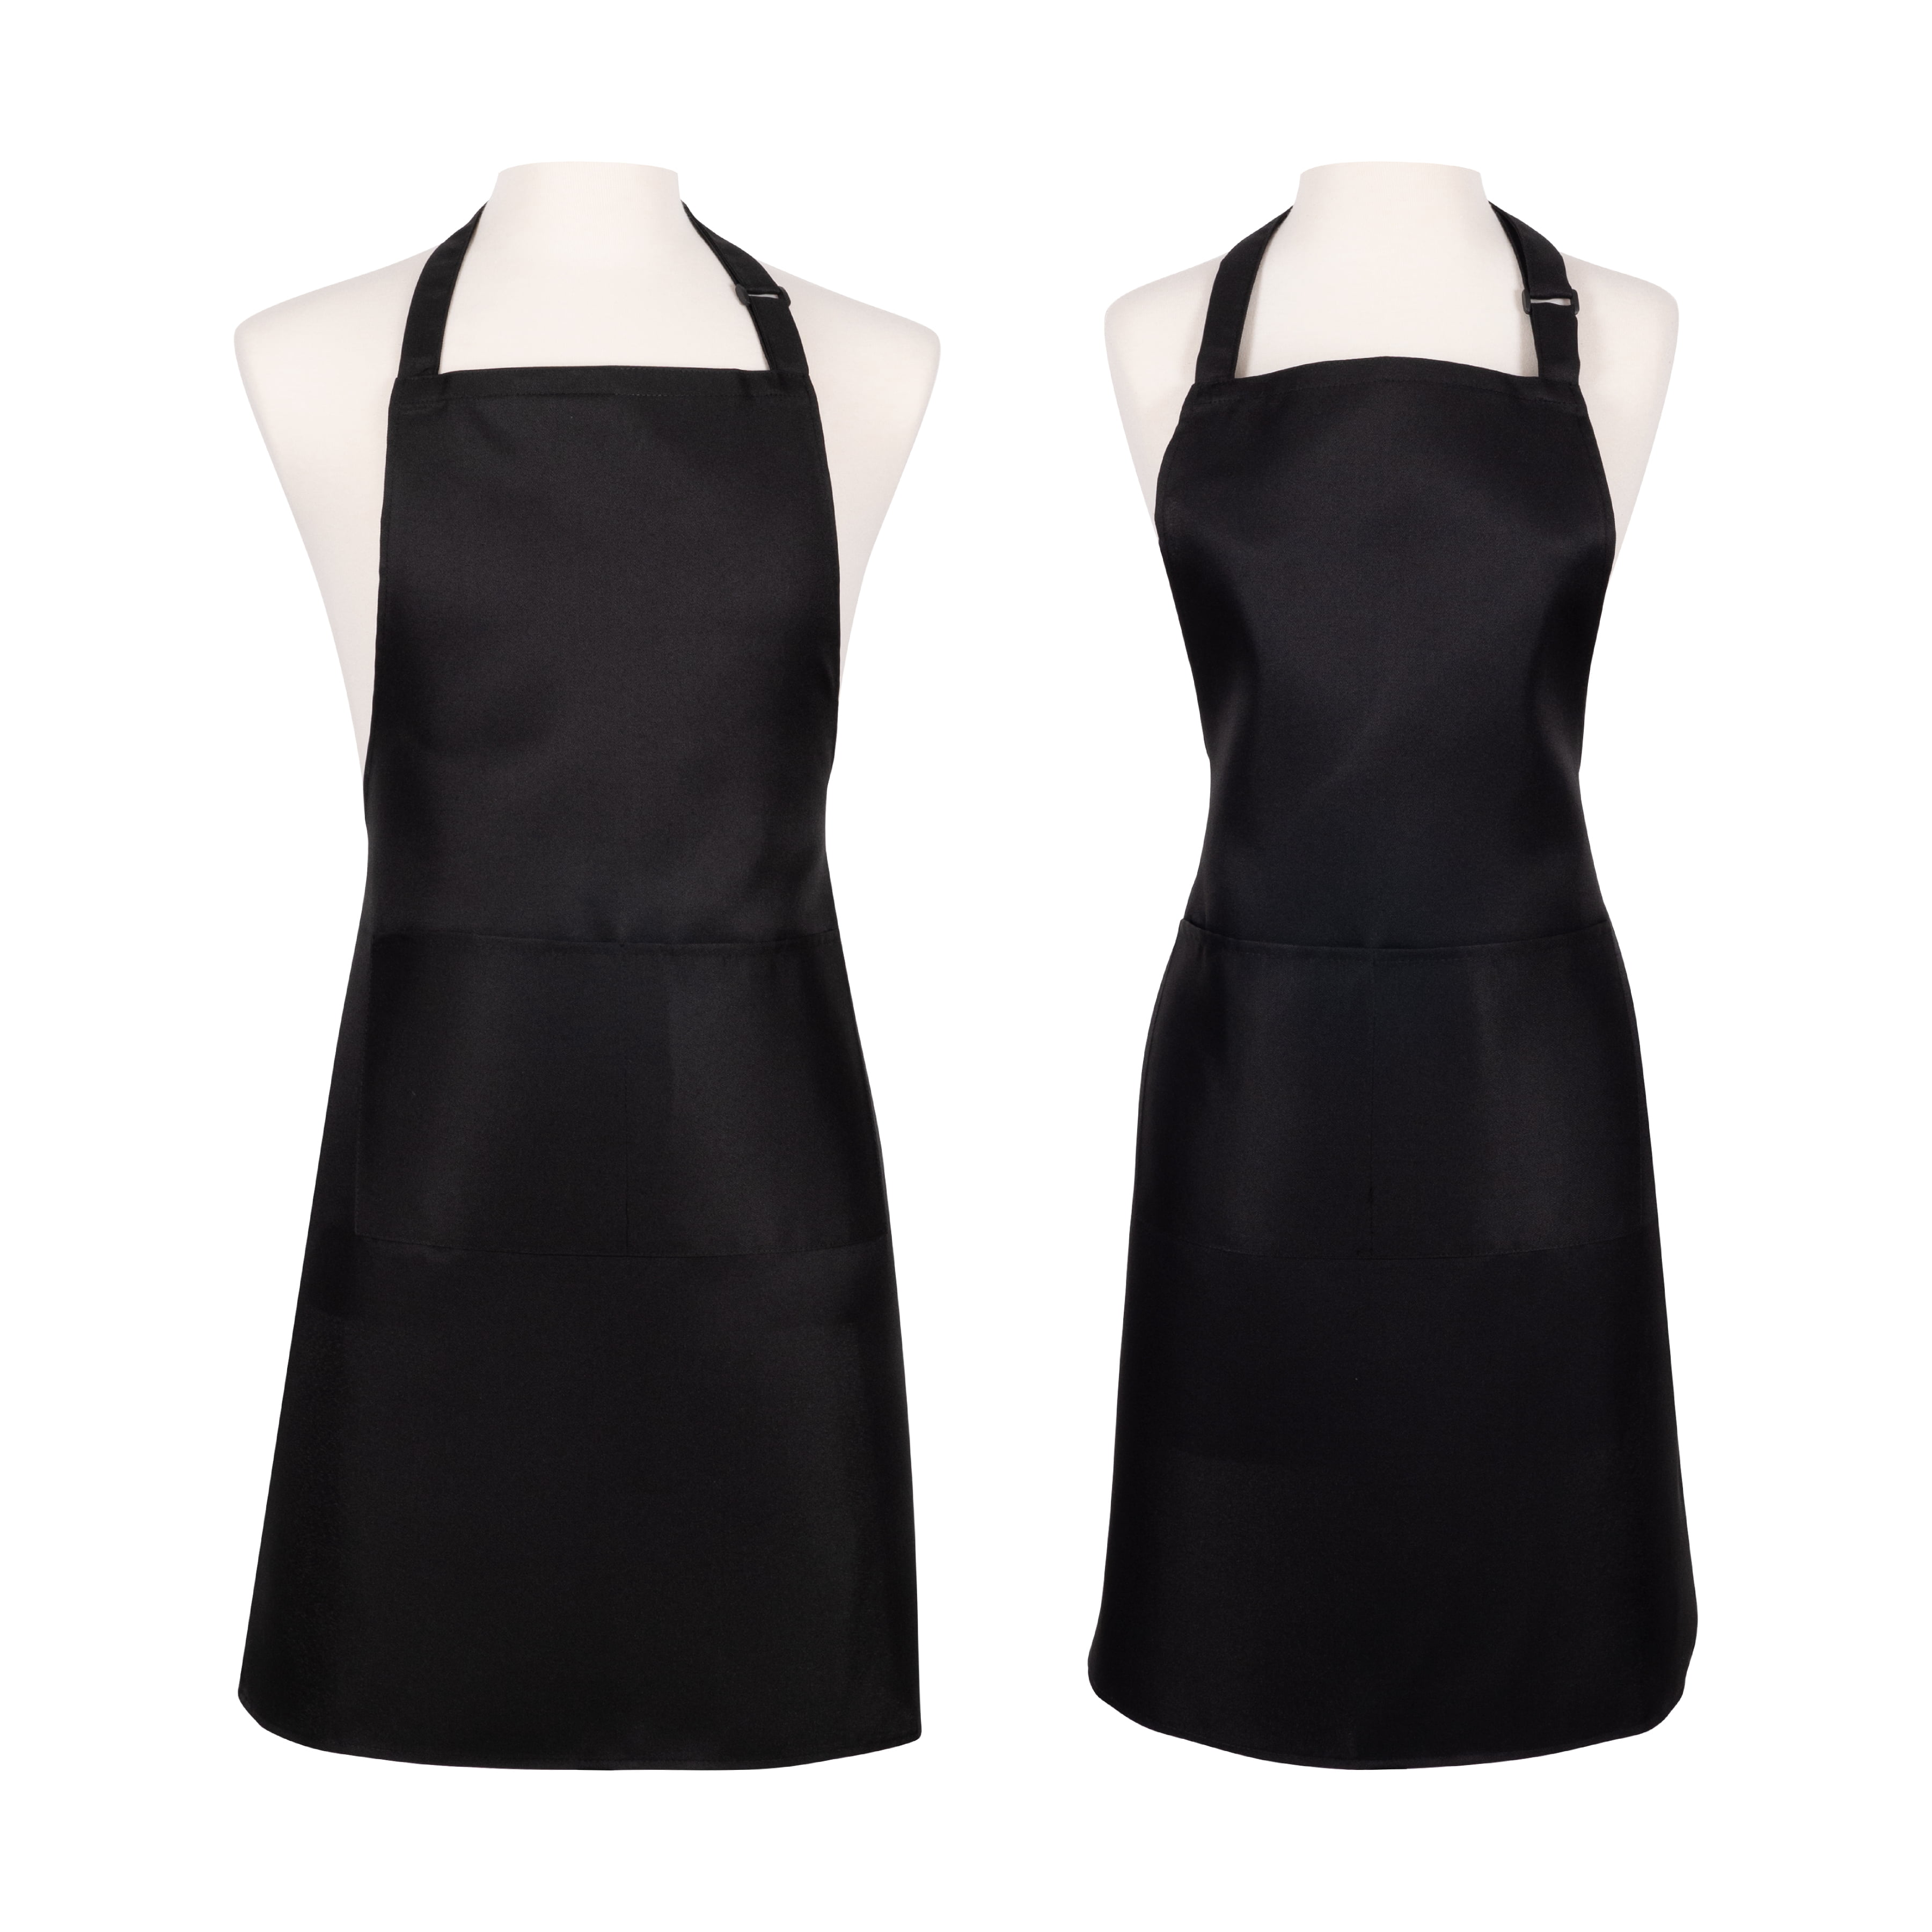 Black vinyl apron 27 x 36  with pockets 